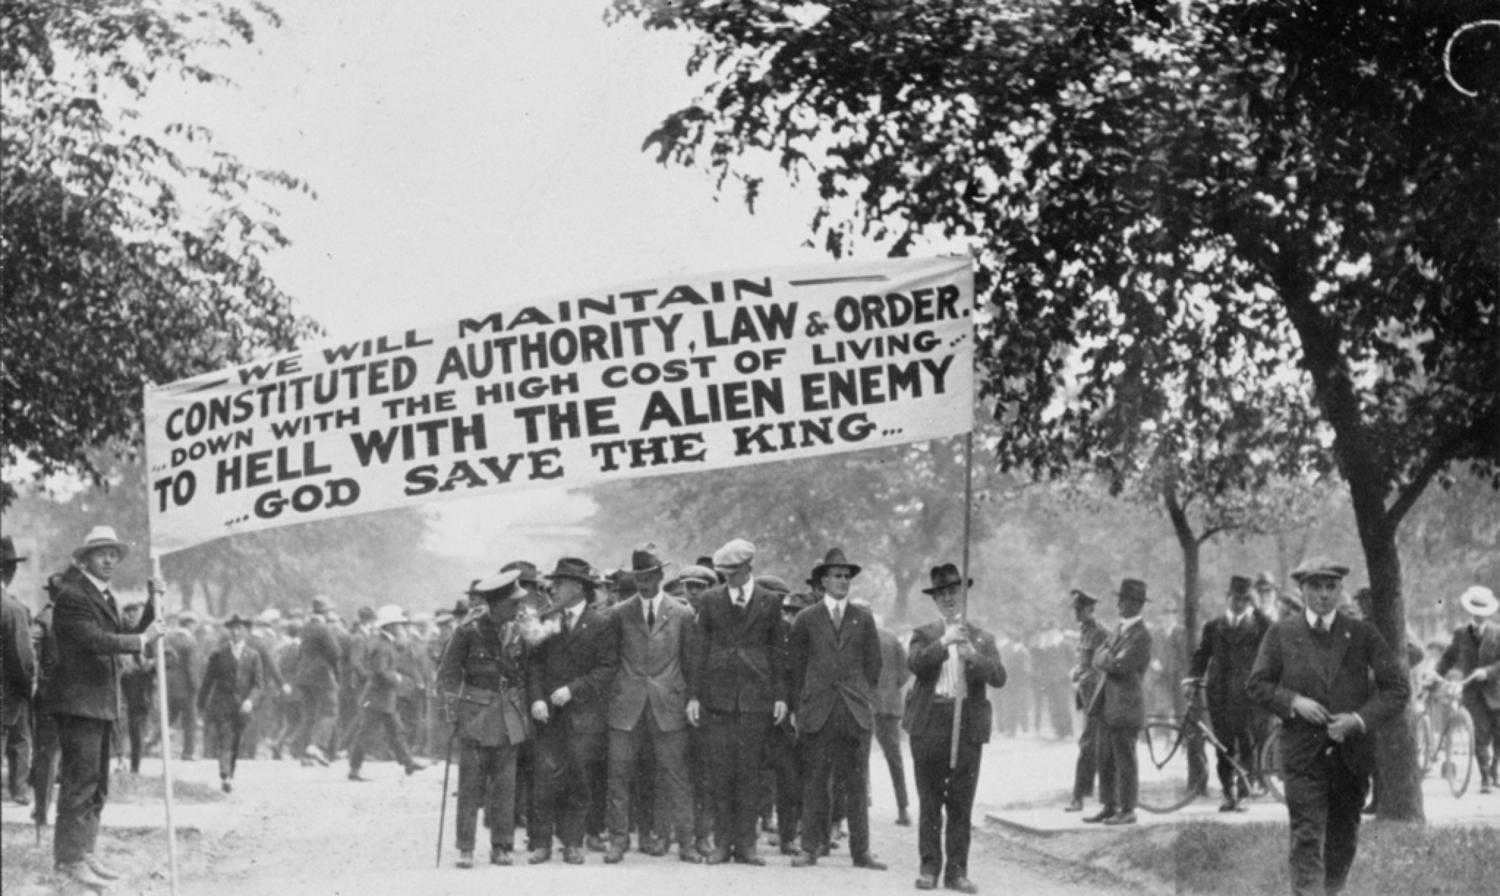  "G. W. V. A. (Great War Veterans Association) parade lining up at Broadway and Main. 4 June 1919."